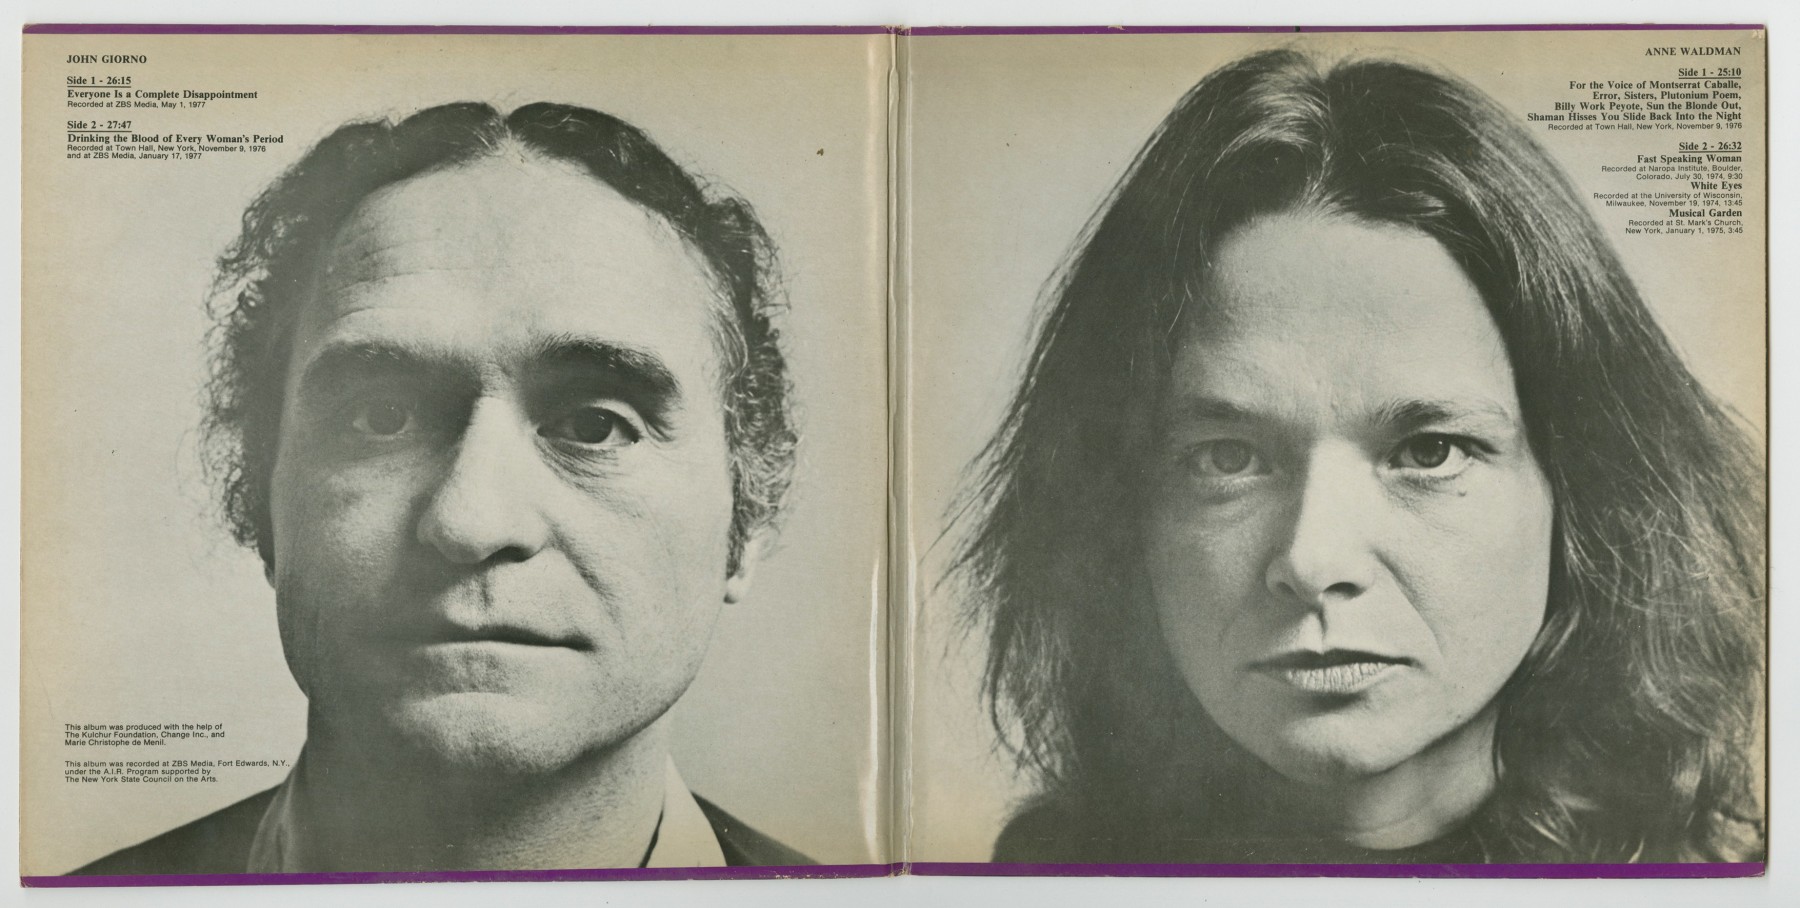 John Giorno and Anne Waldman: A Kulchur Selection (1977), inside spread